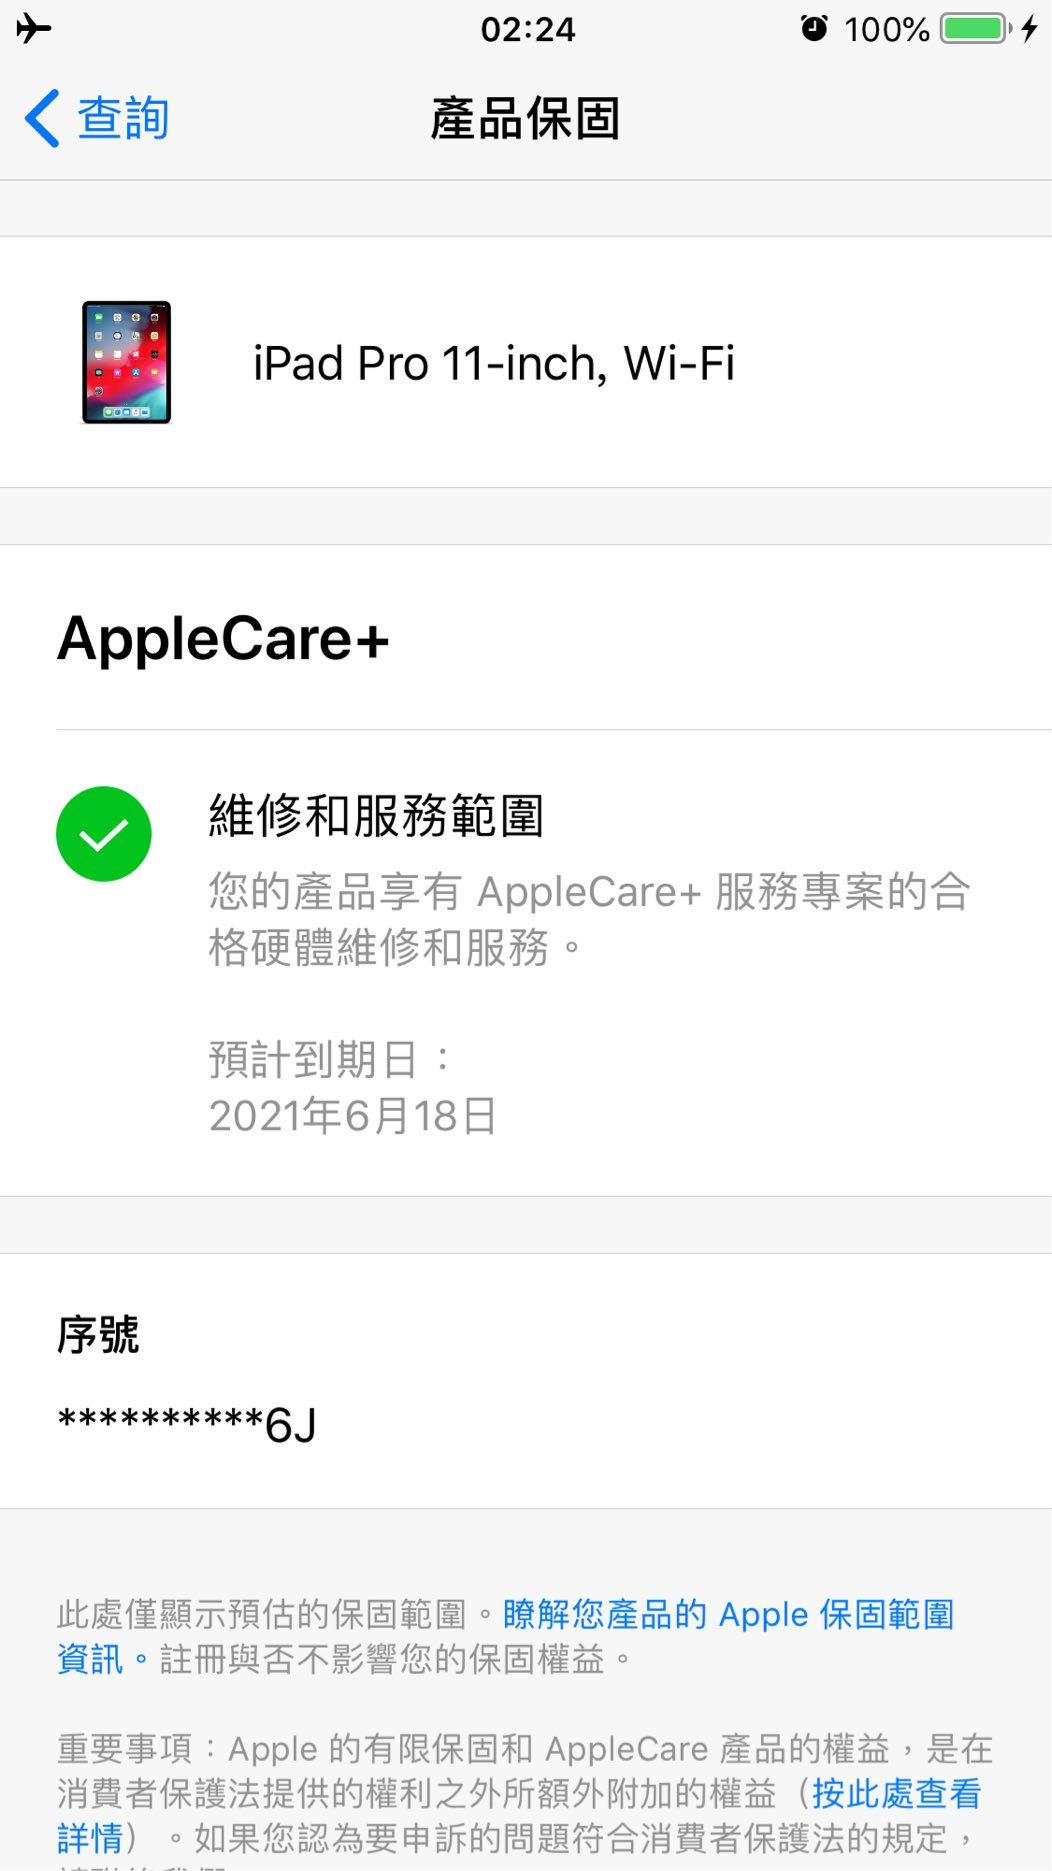 Uploaded_via_HKEPC_IR_Pro_iOS(A8A5A).jpg